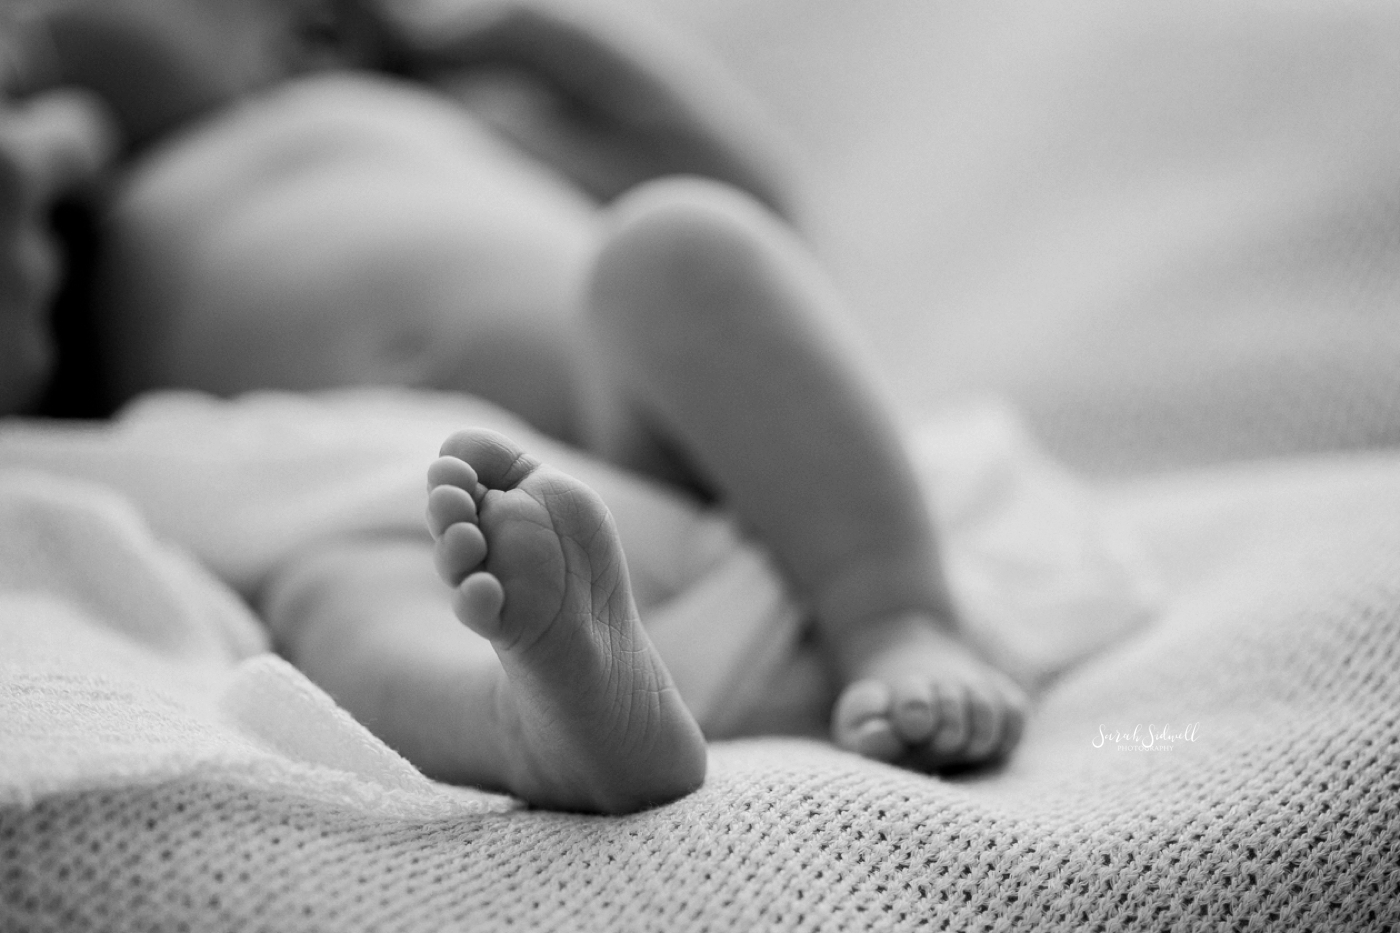 A newborn's foot flexes as he sleeps peacefully.